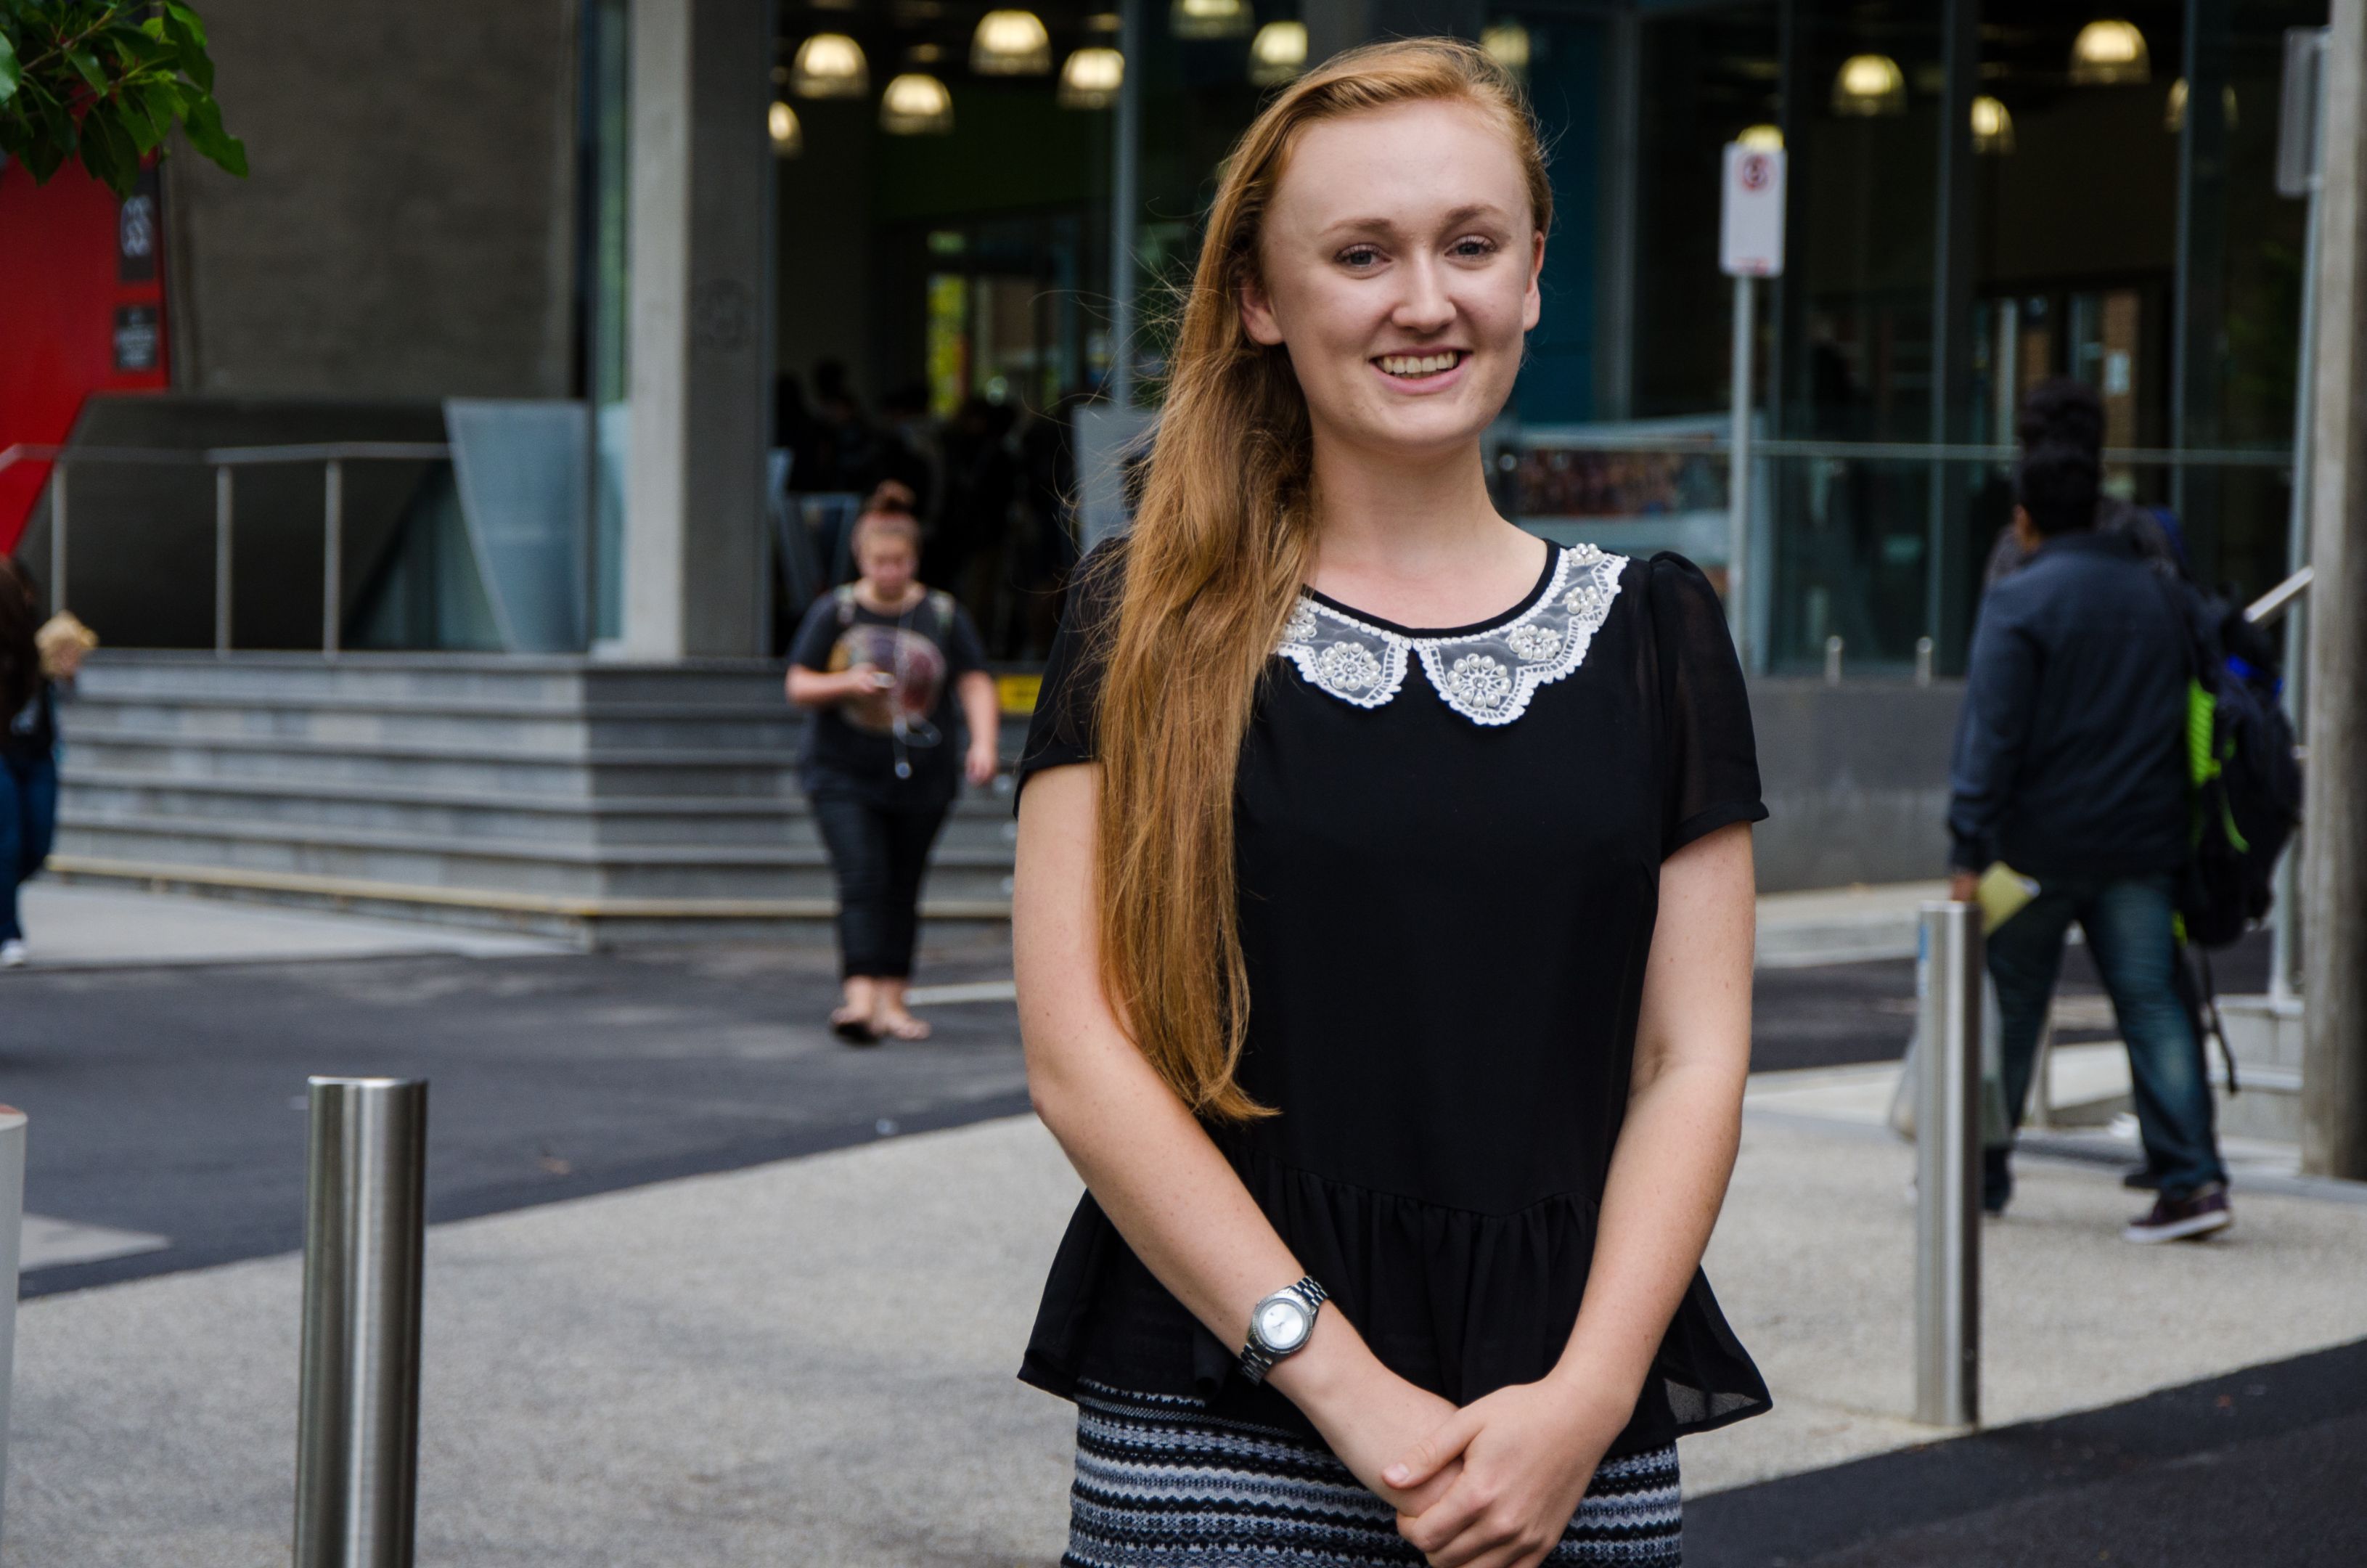 Female student smiling to camera on Swinburne campus